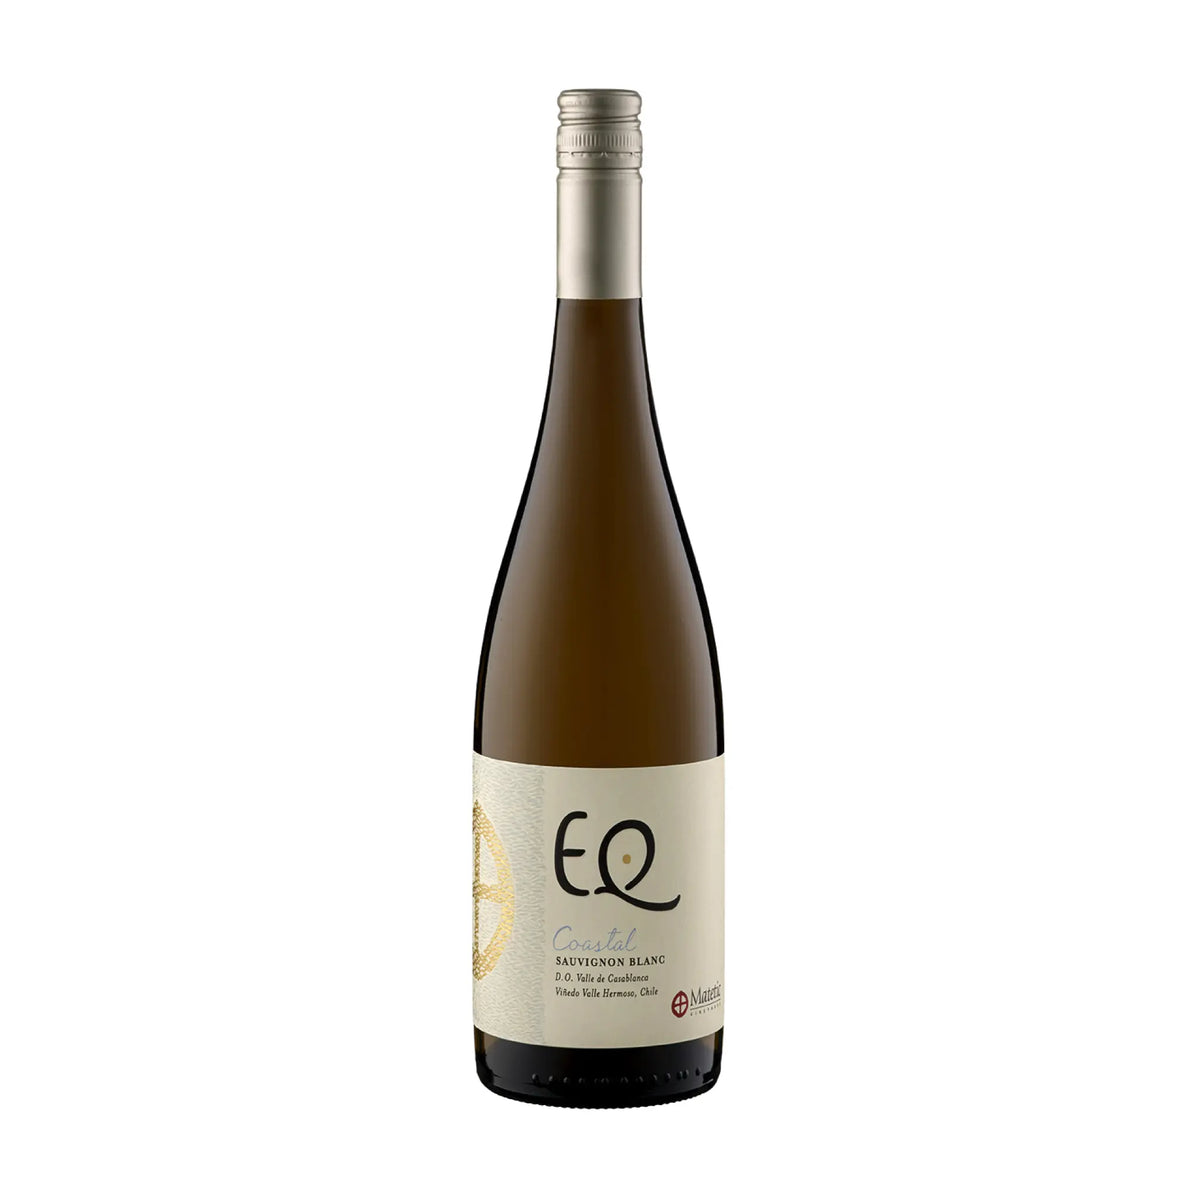 Matetic Vineyards-Weißwein-Sauvignon Blanc-Chile-Casablanca-2021 EQ Coastal Sauvignon Blanc - Bio-WINECOM